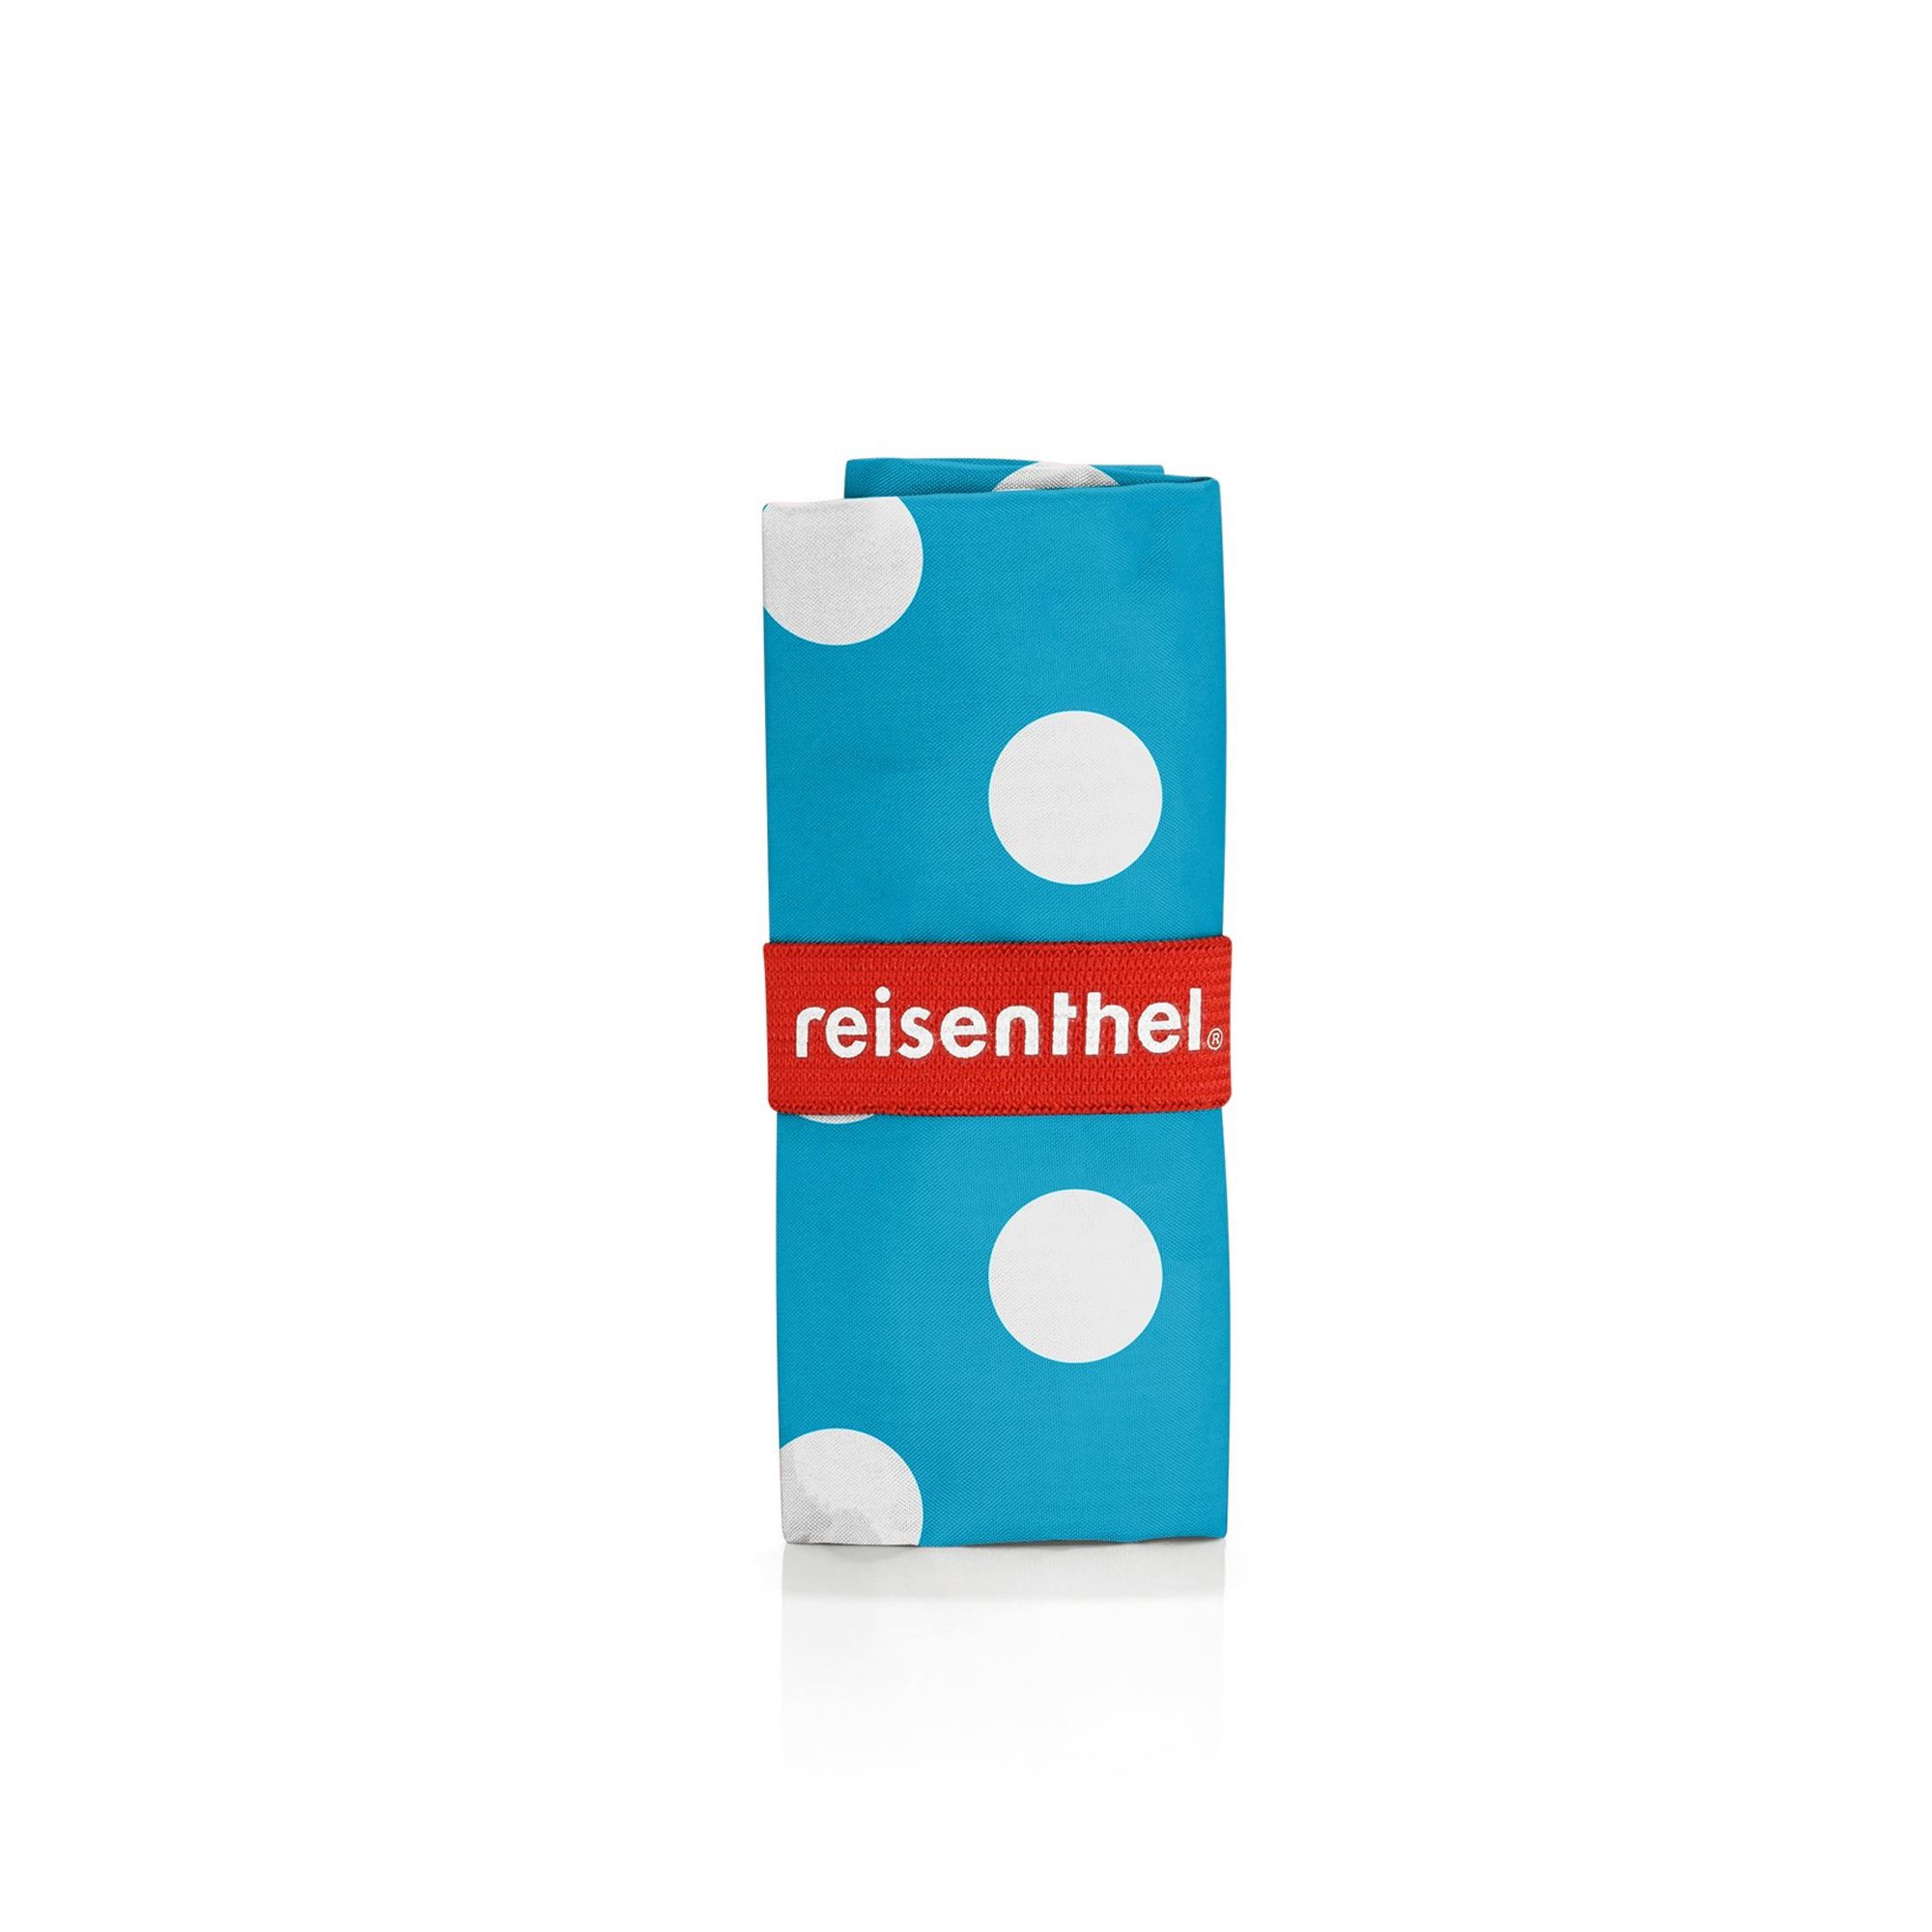 reisenthel - mini maxi shopper - dots white light blue